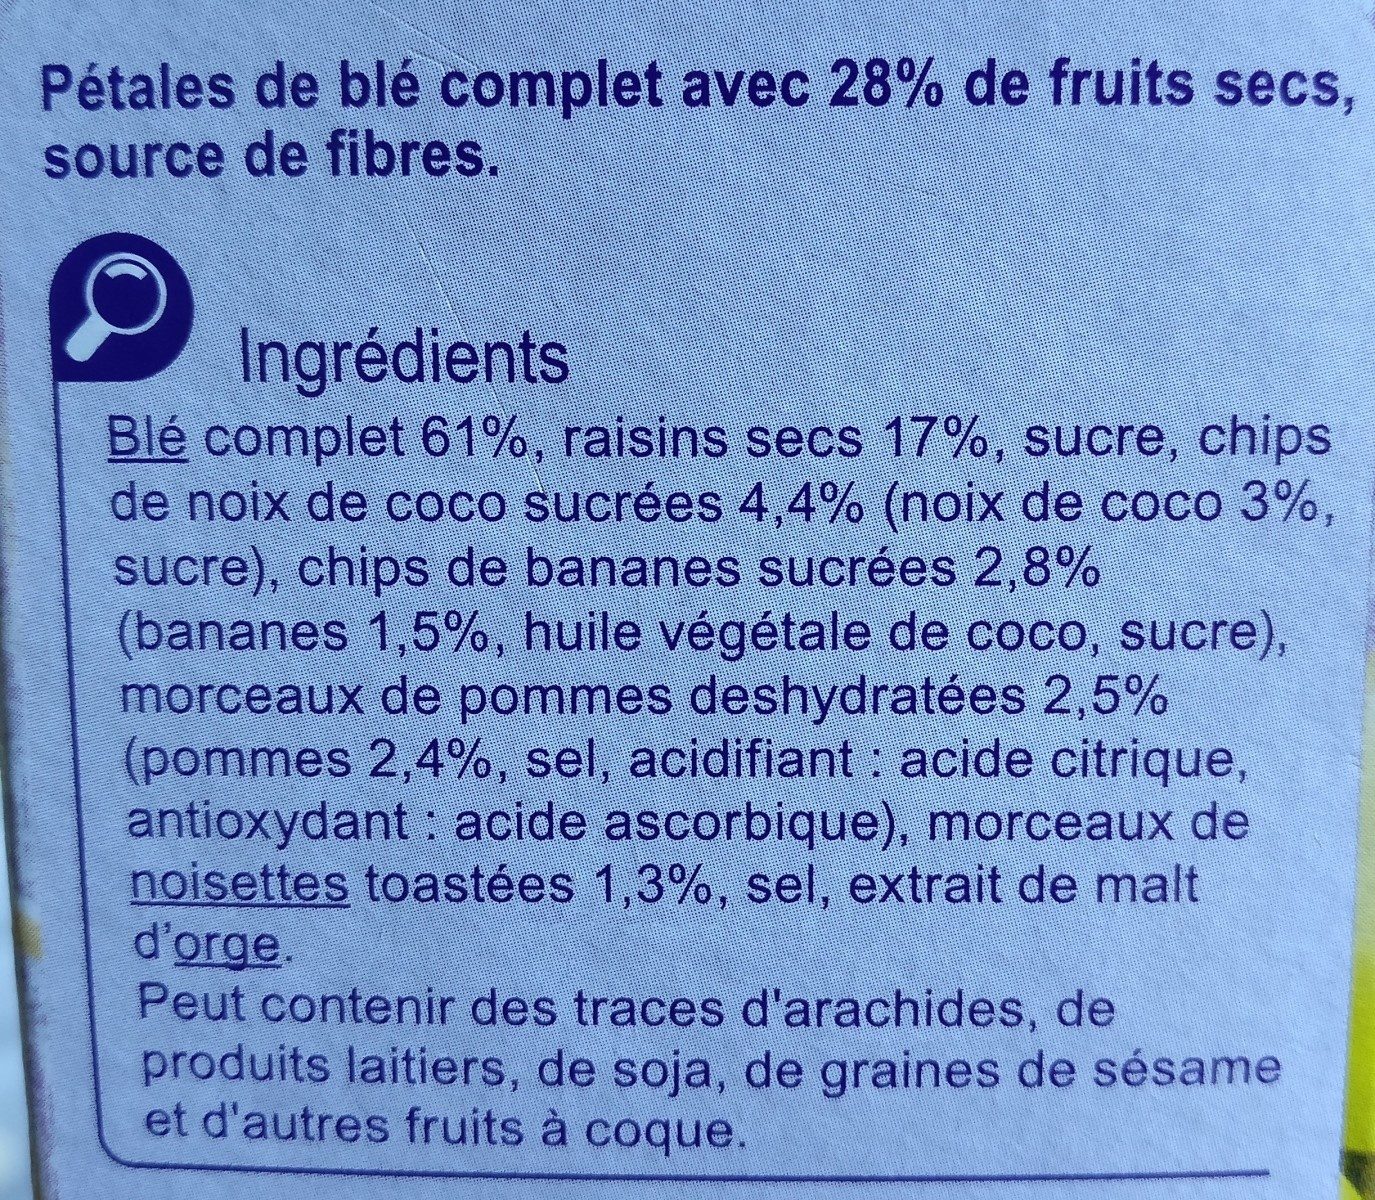 Fibra 5 fruits secs - Ingredients - fr